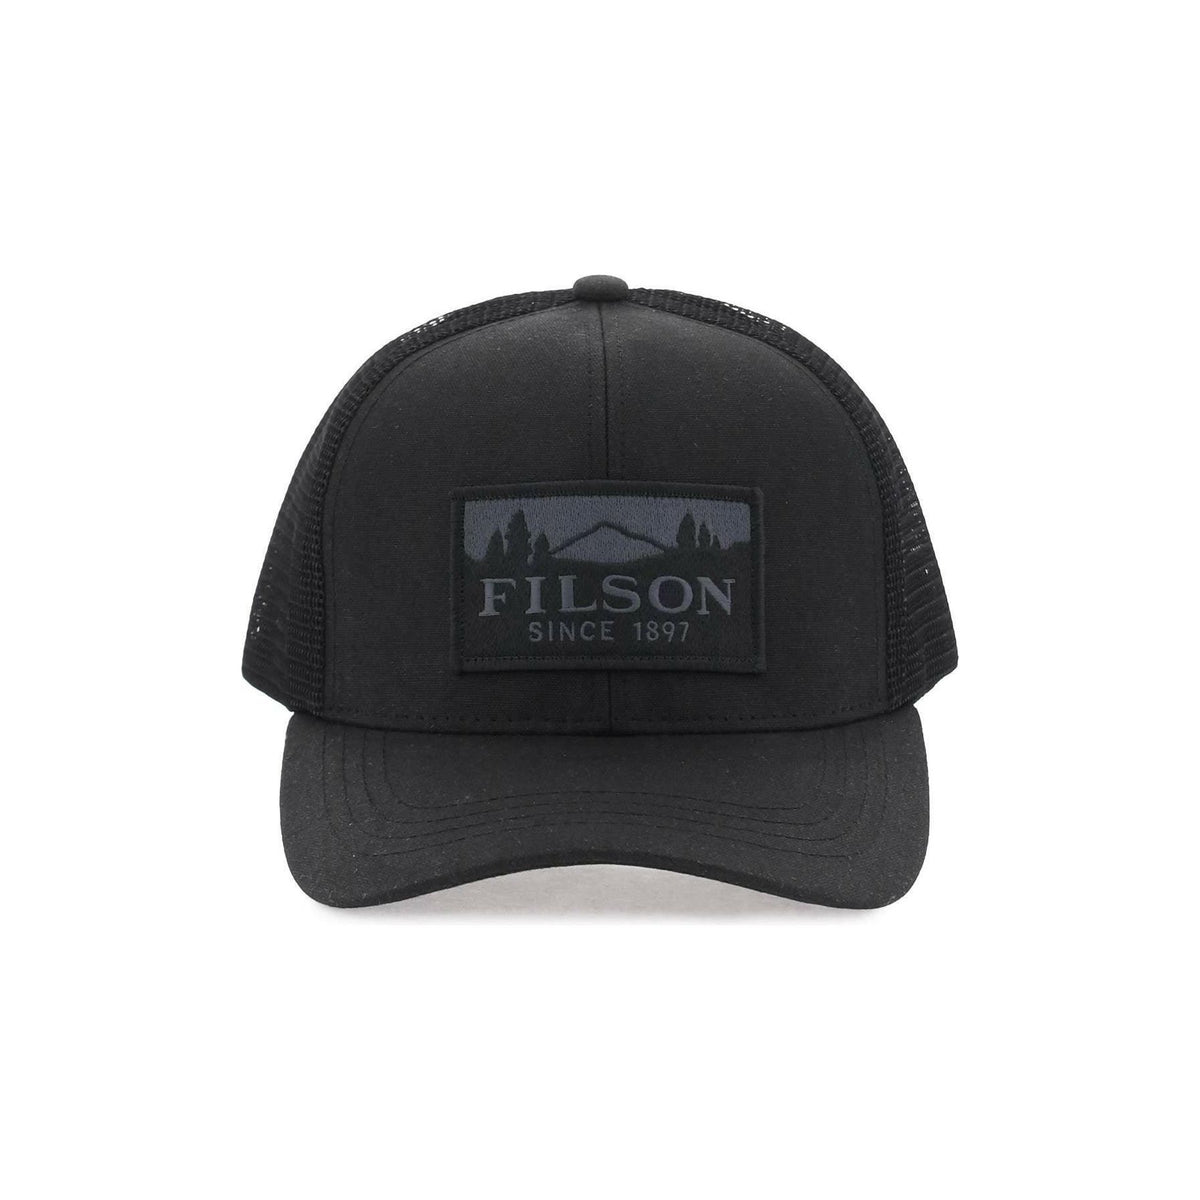 FILSON - Black Water-Repellent Cotton Trucker Hat - JOHN JULIA